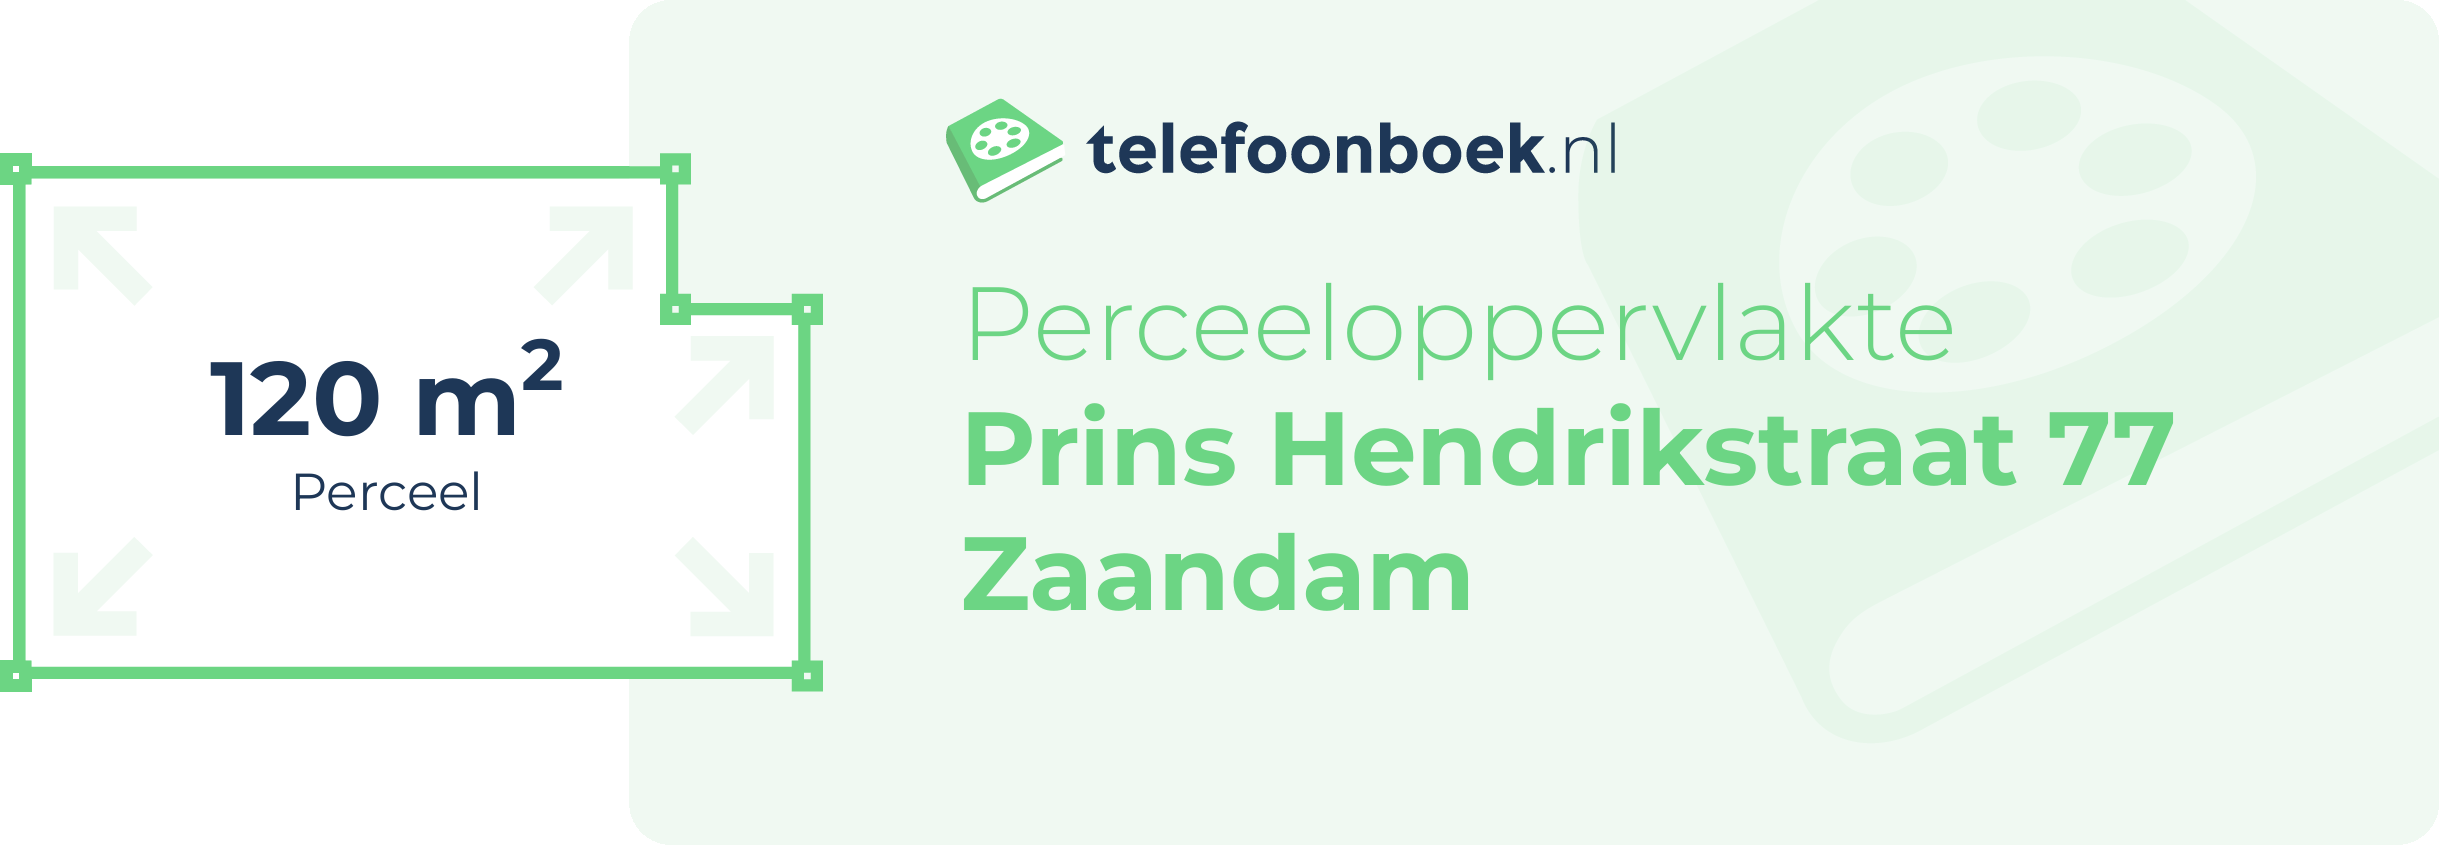 Perceeloppervlakte Prins Hendrikstraat 77 Zaandam